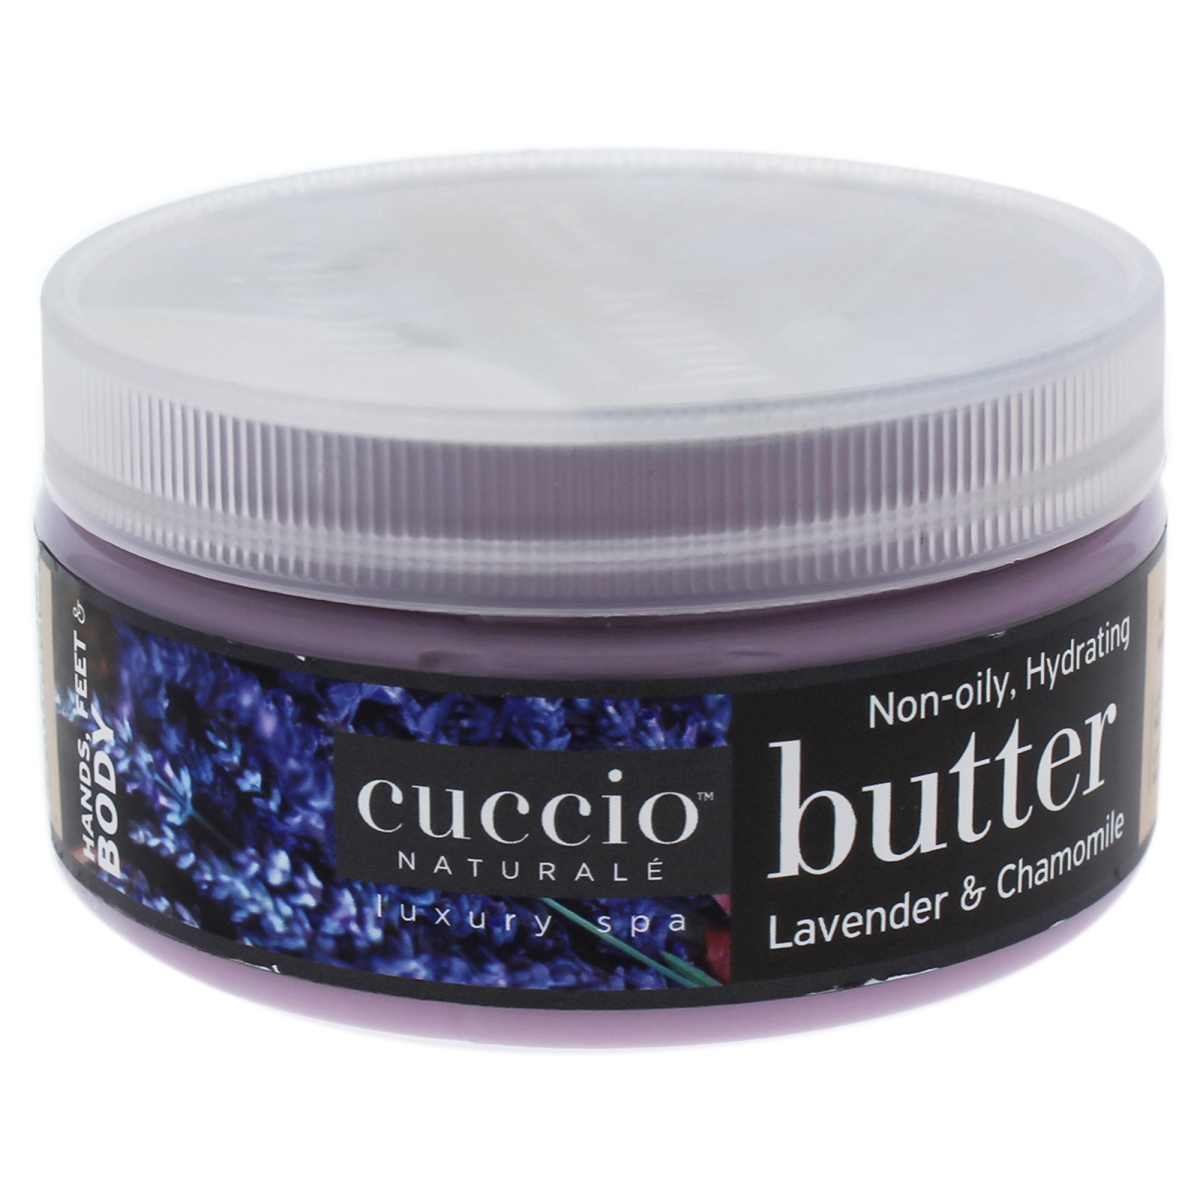 I0090881 Butter Blend Body Lotion For Unisex - Lavender & Chamomile - 8 Oz